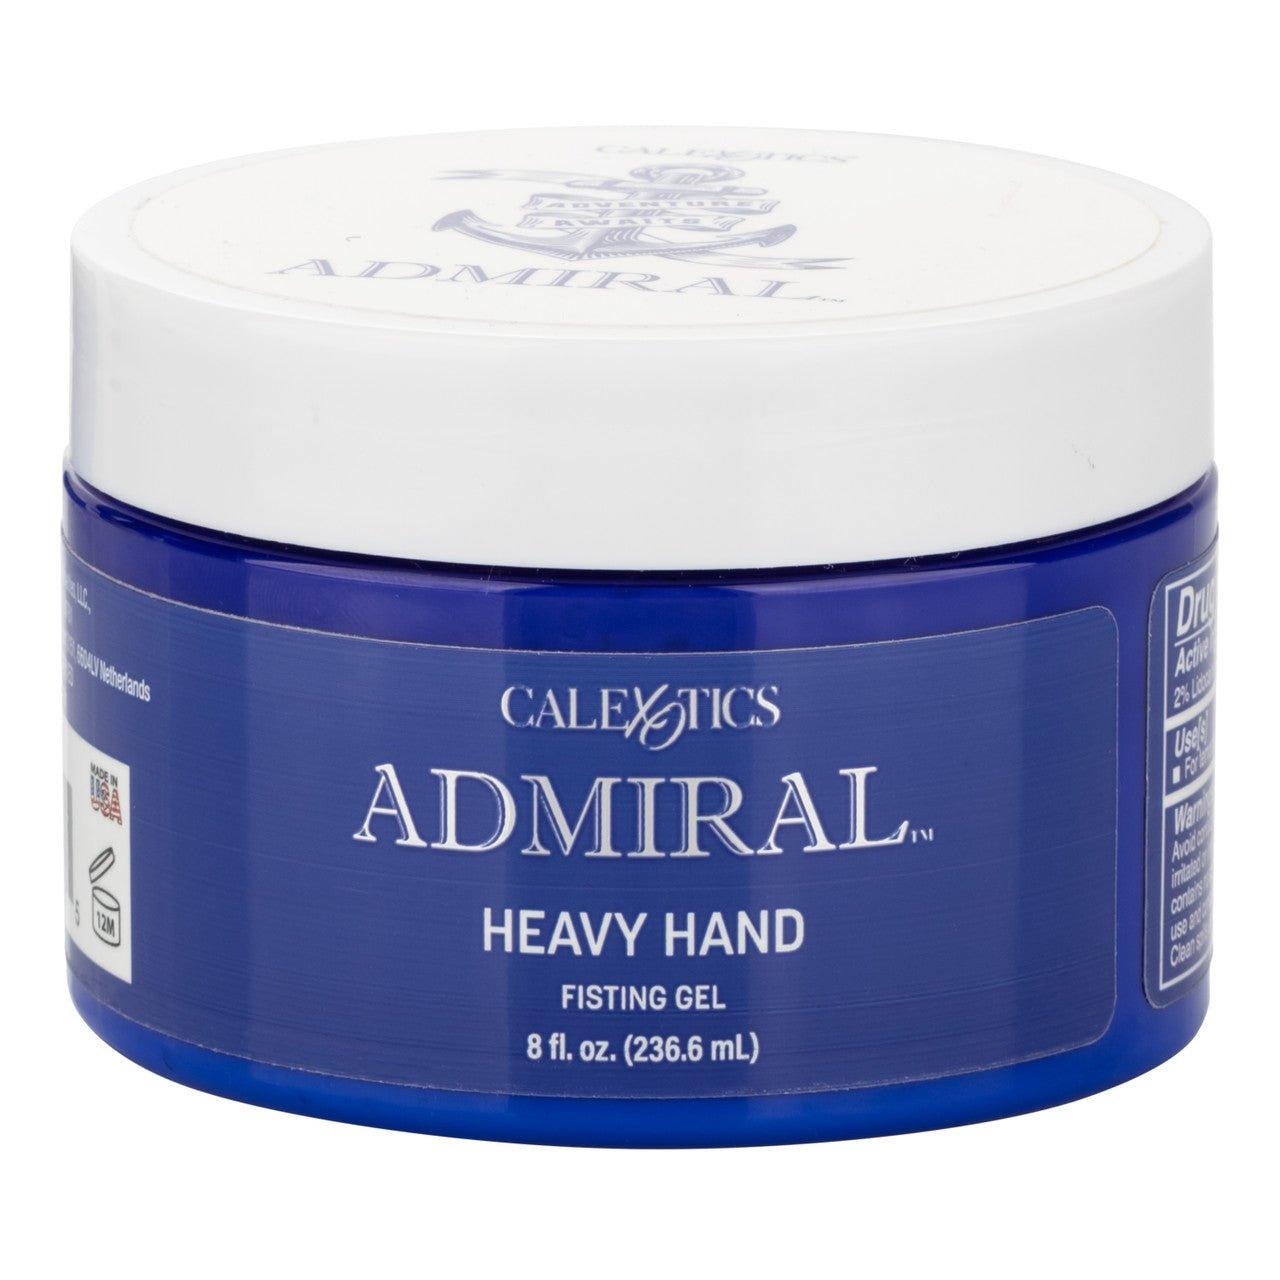 Admiral Heavy Hand Fisting Gel Jar - 8 oz (236.6mL) - CheapLubes.com